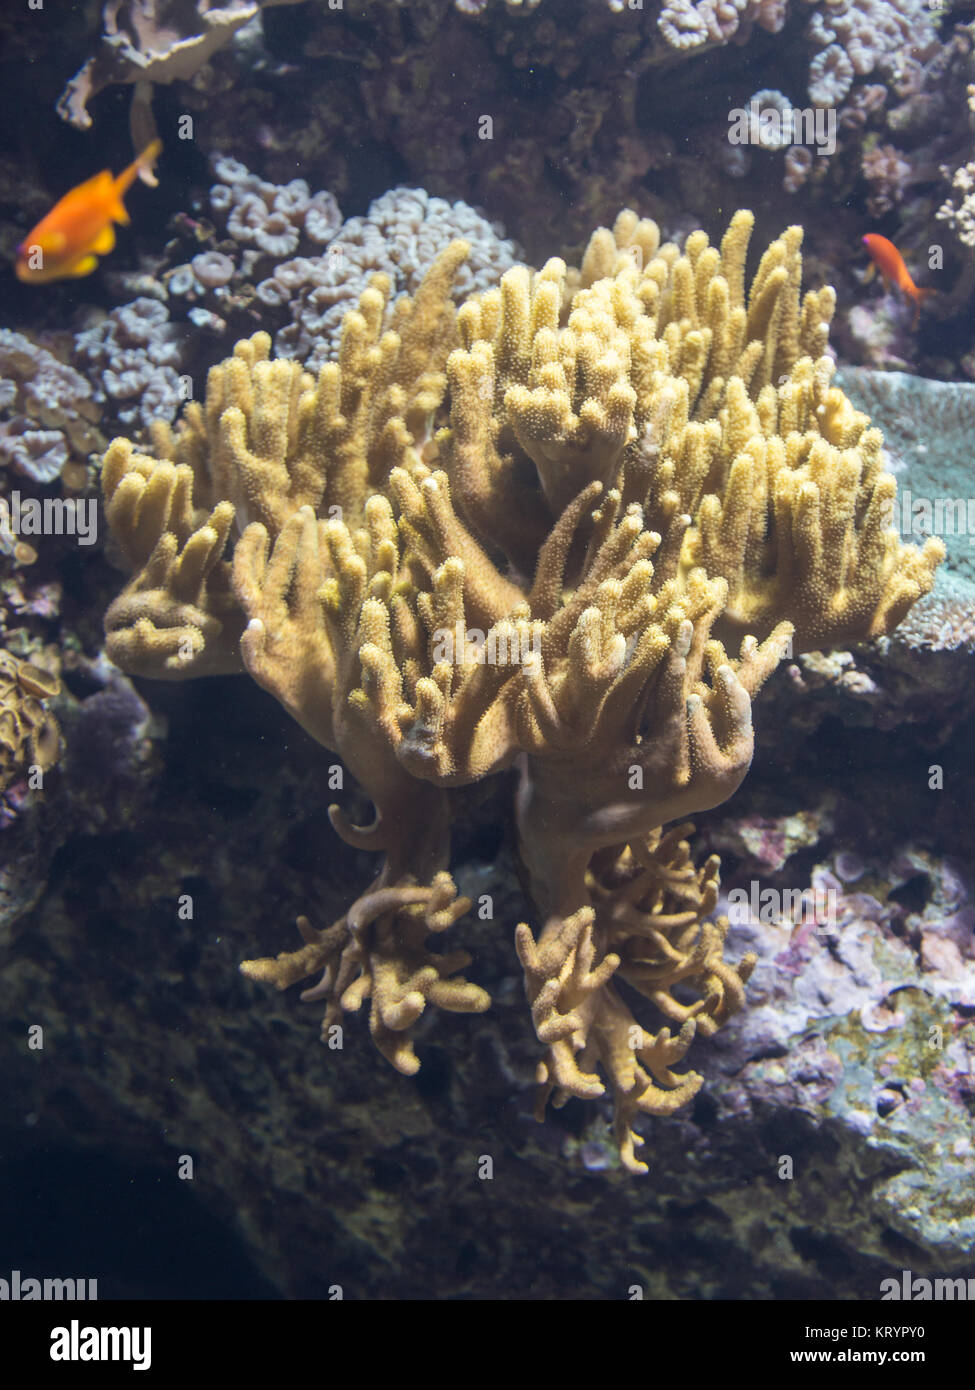 Yellow Beautiful Anemone inside Aquarium with Fish. Stock Photo